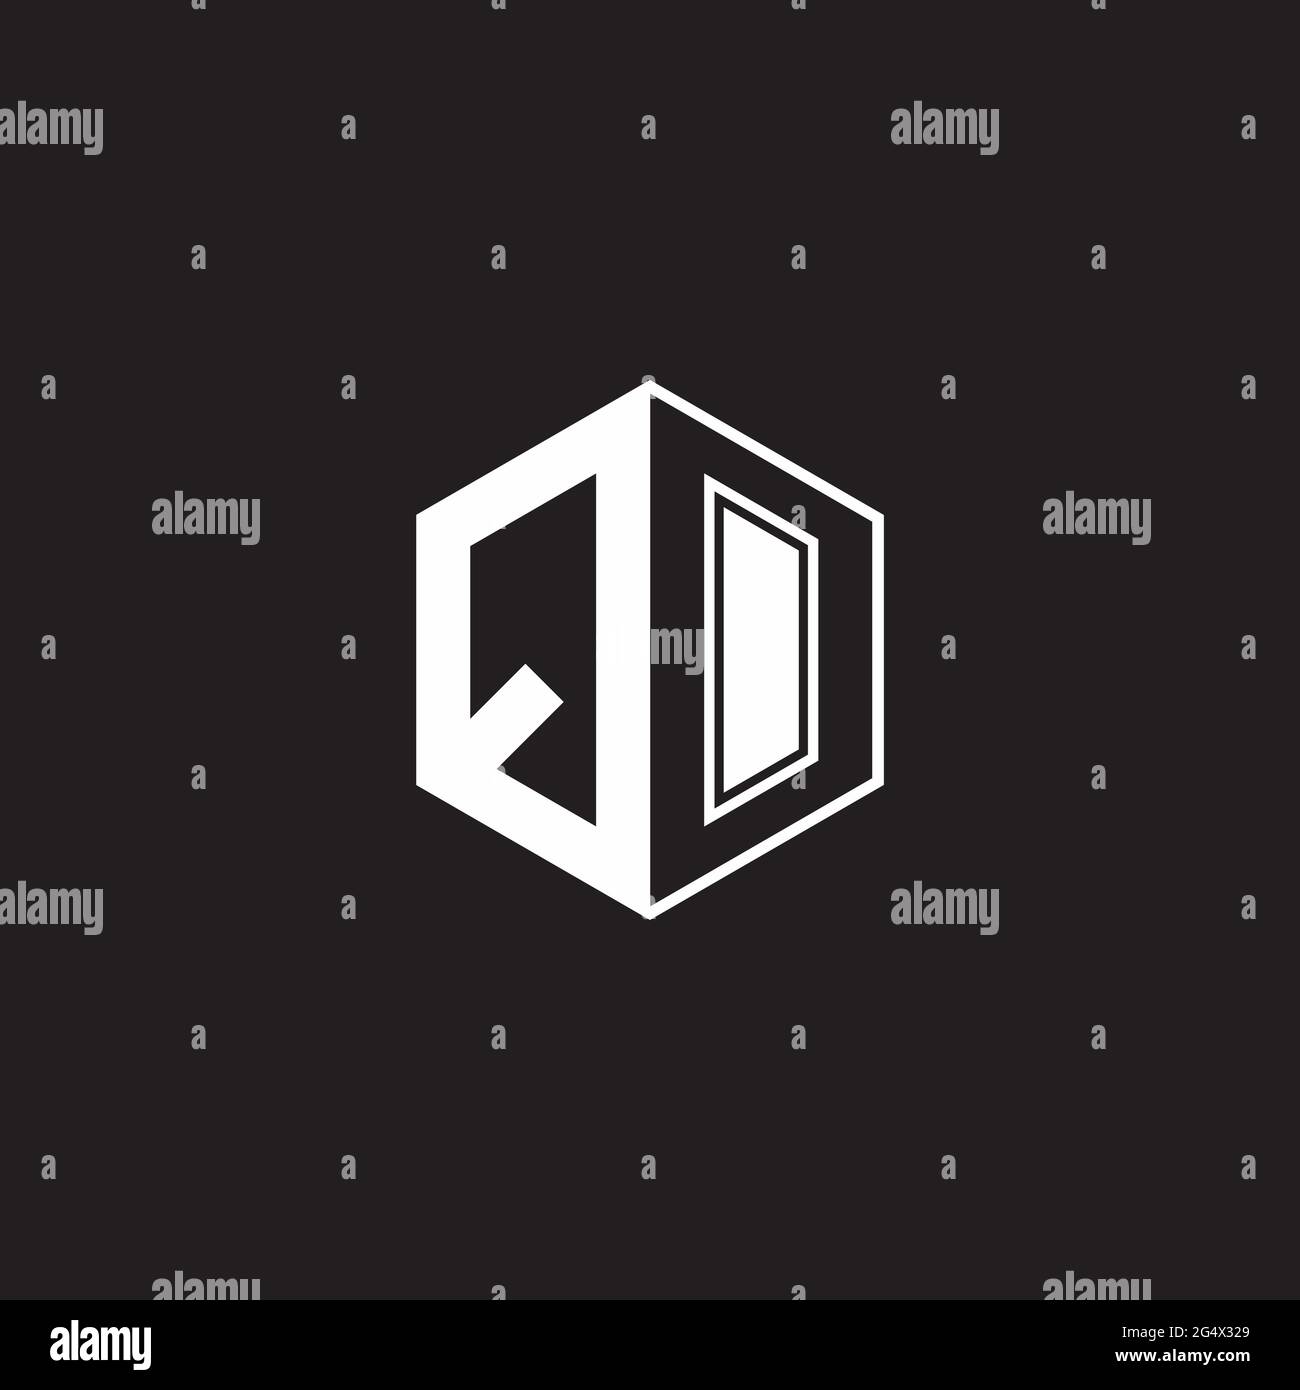 QO Q O OQ Logo monogram hexagon with black background negative space style Stock Vector